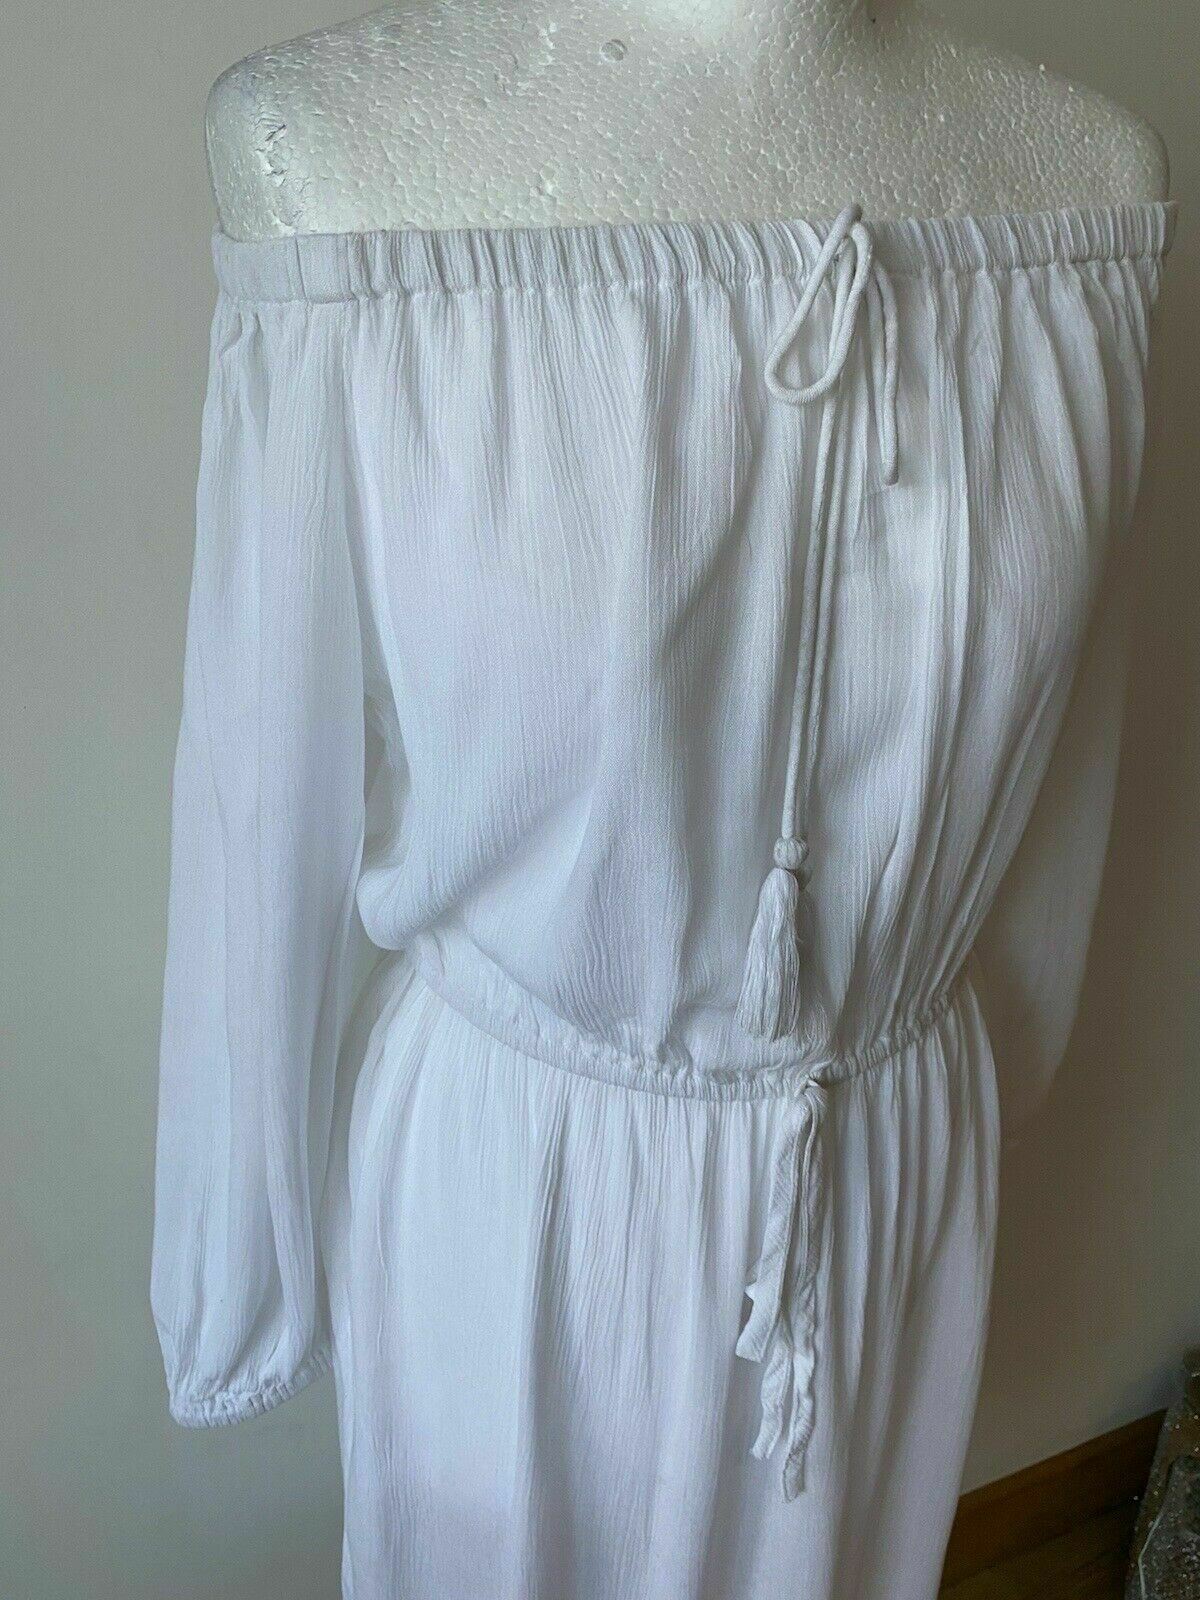 White Crepe Off The Shoulder Dress Size 10 Crinkled - Beagle Boutique Fashion Outlet